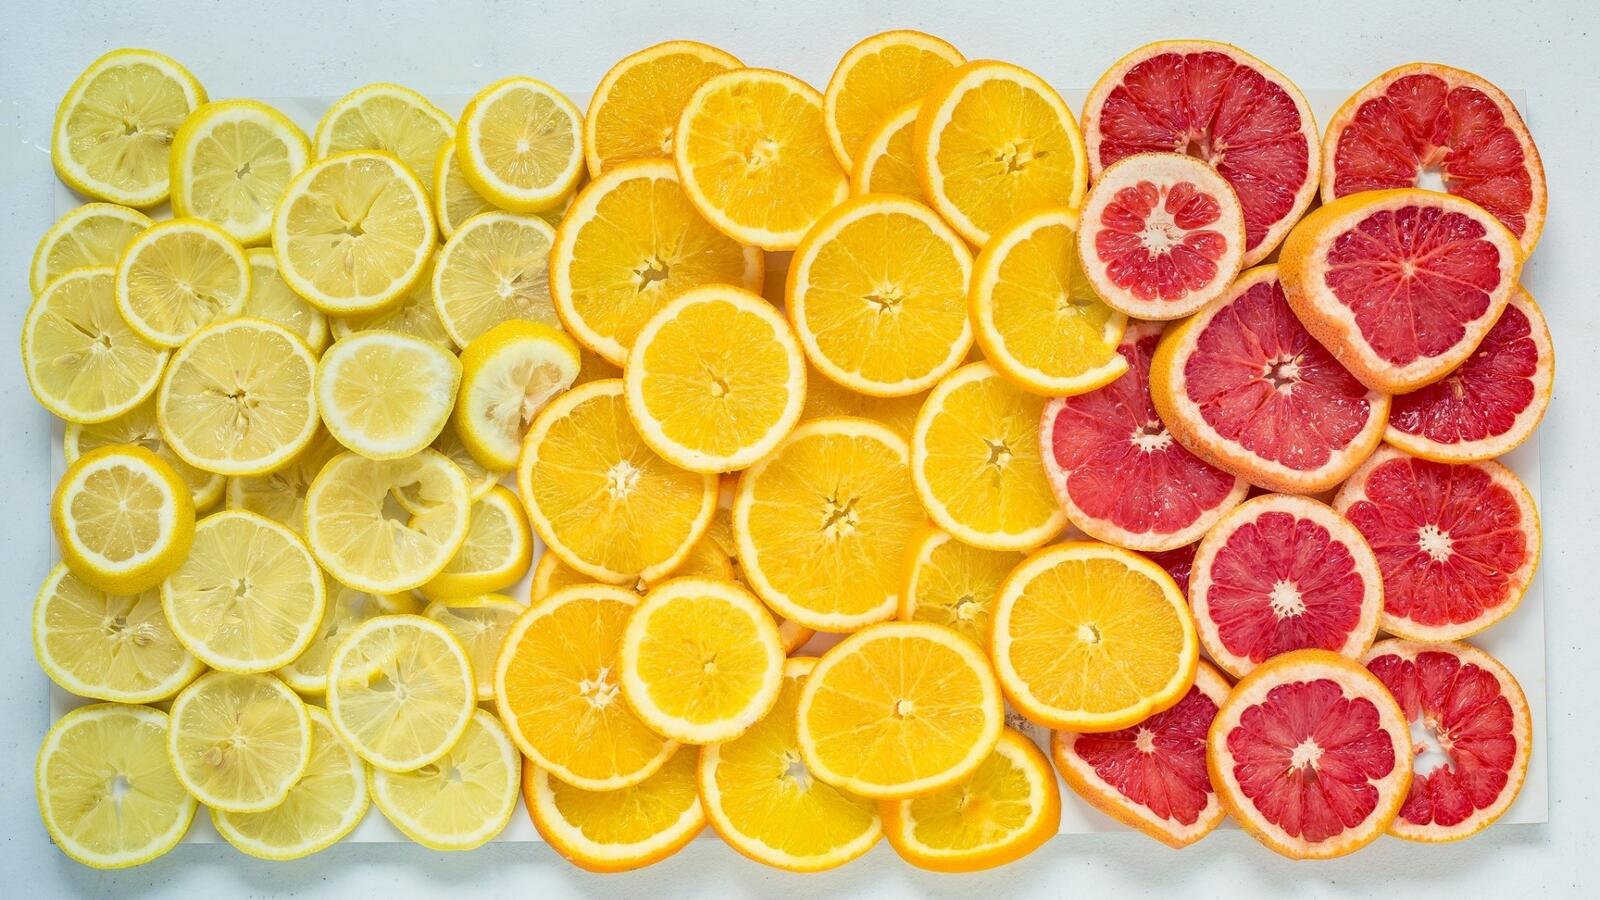 Wallpapers orange fruits lemons grapefruits on the desktop